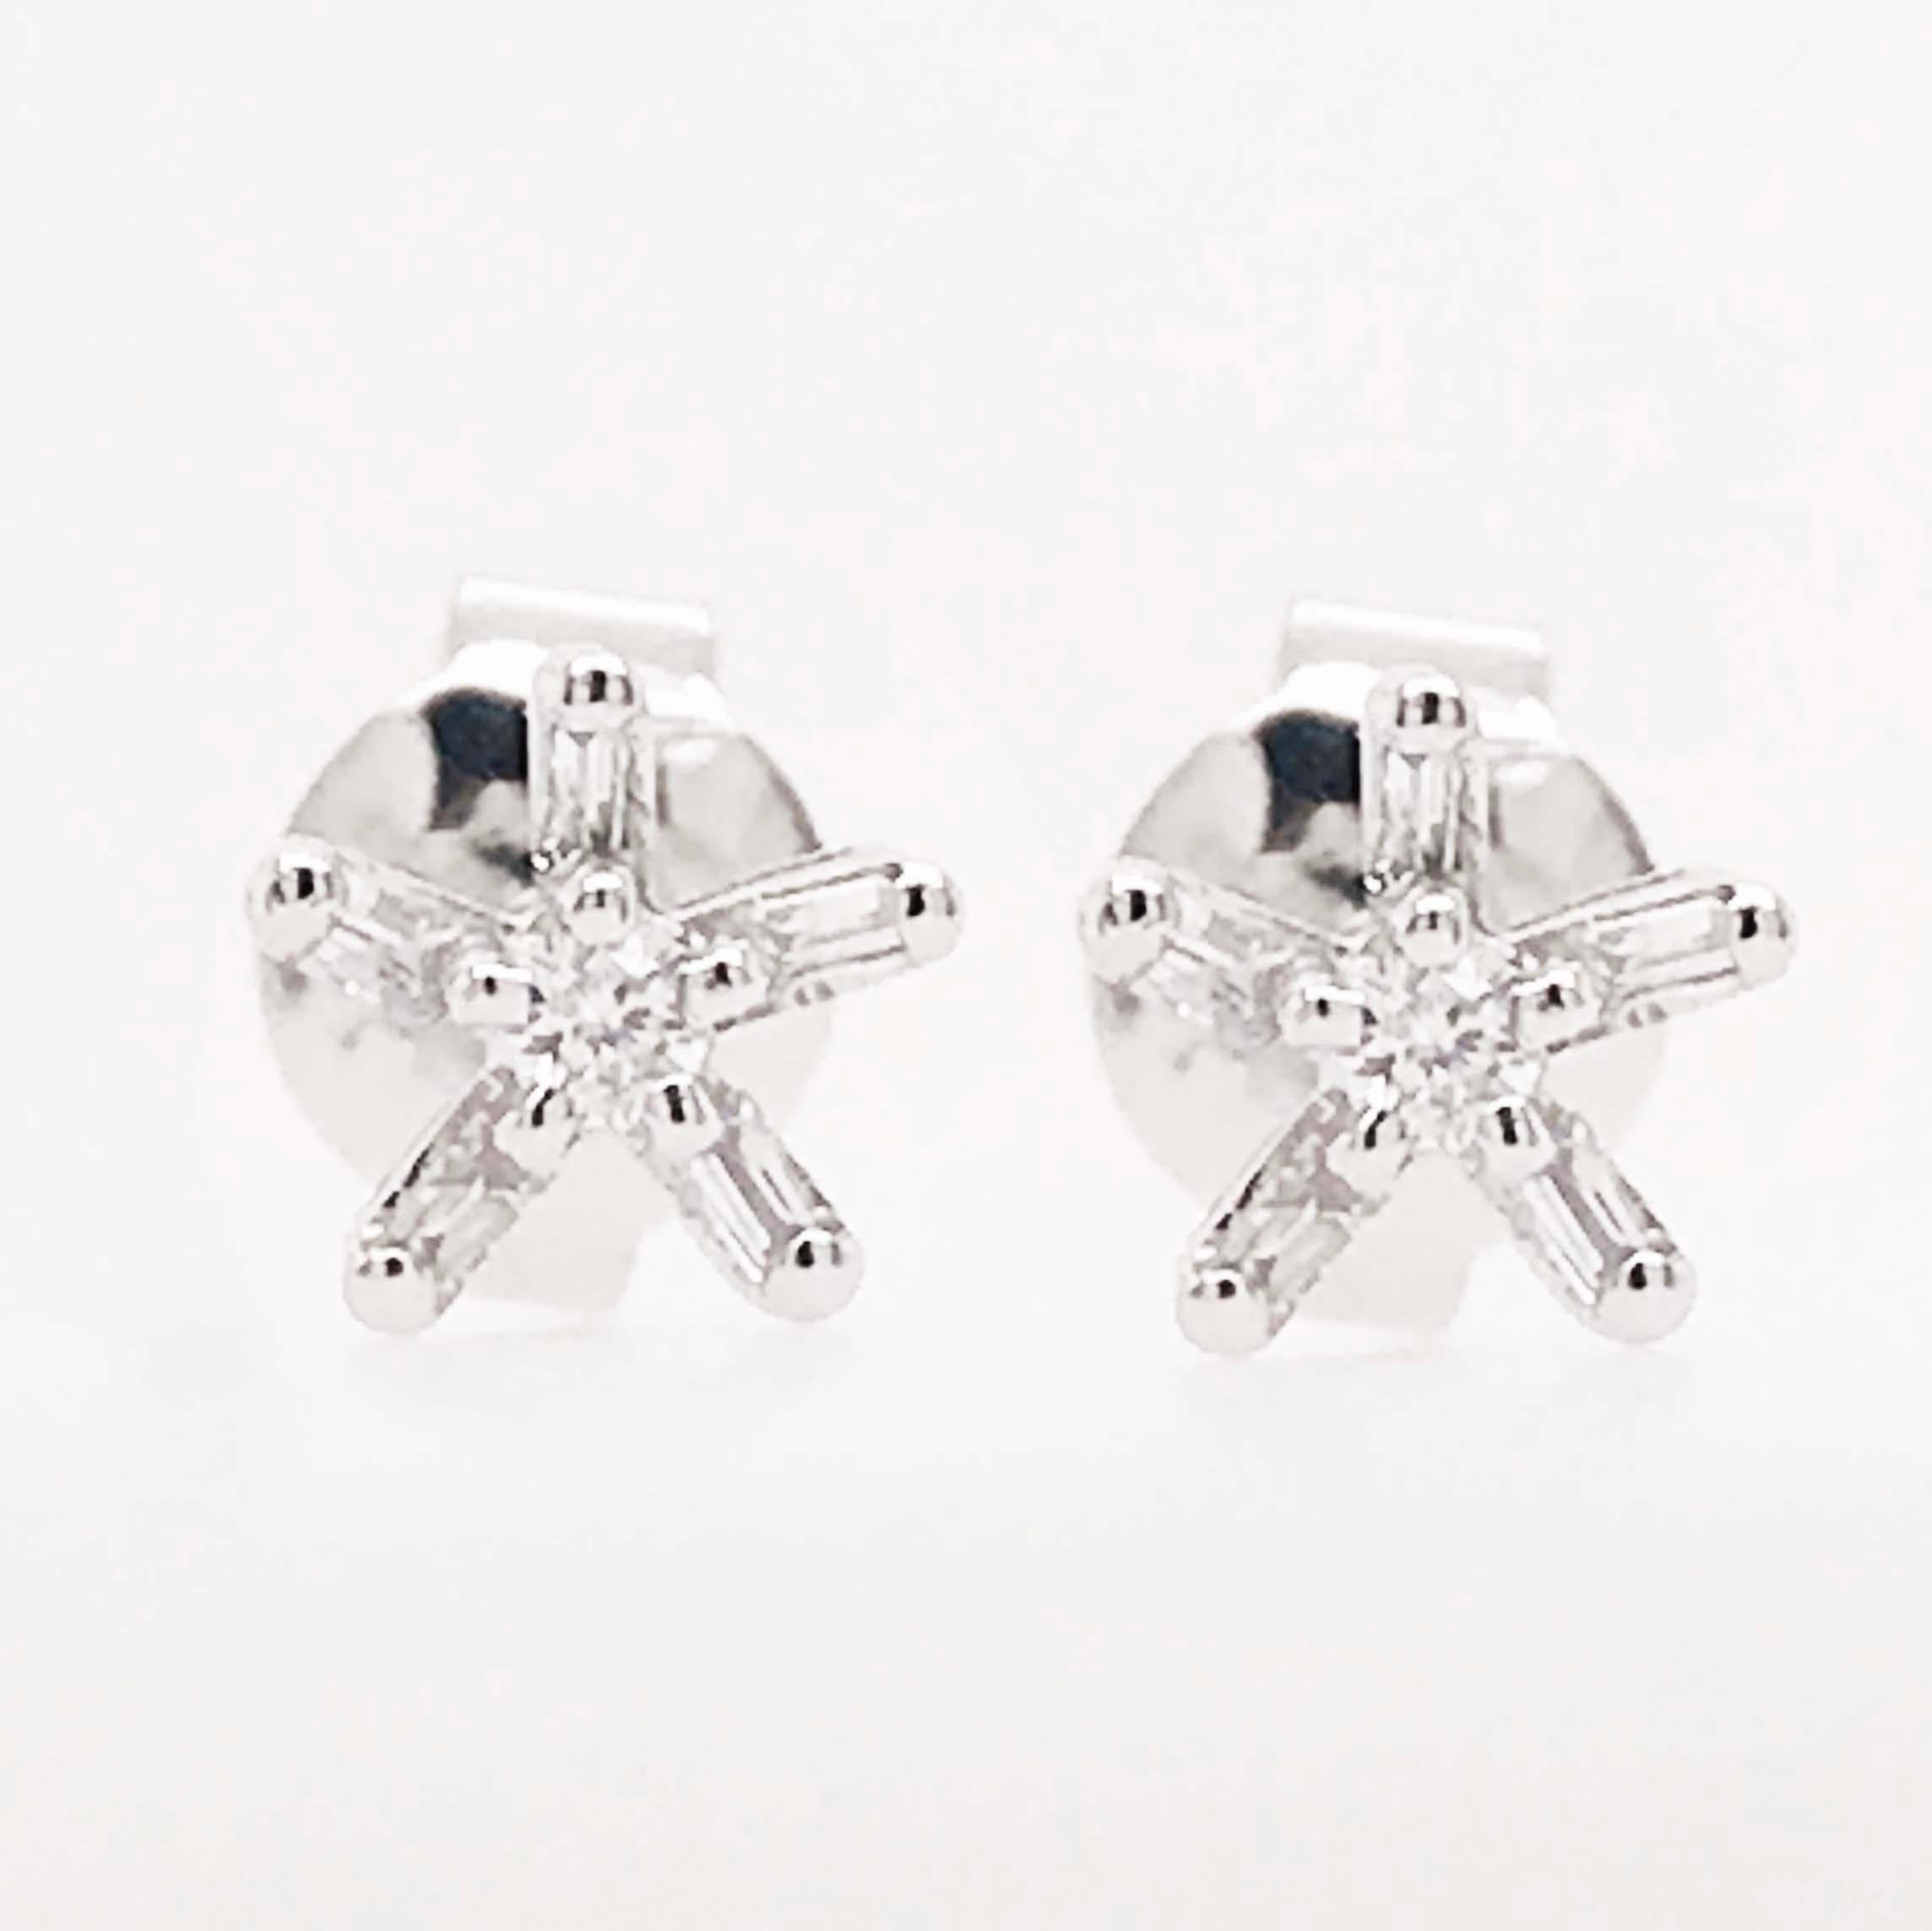 Round Cut Diamond Star Flower Earring Studs, White Gold Diamond Star Earrings Flower Stud